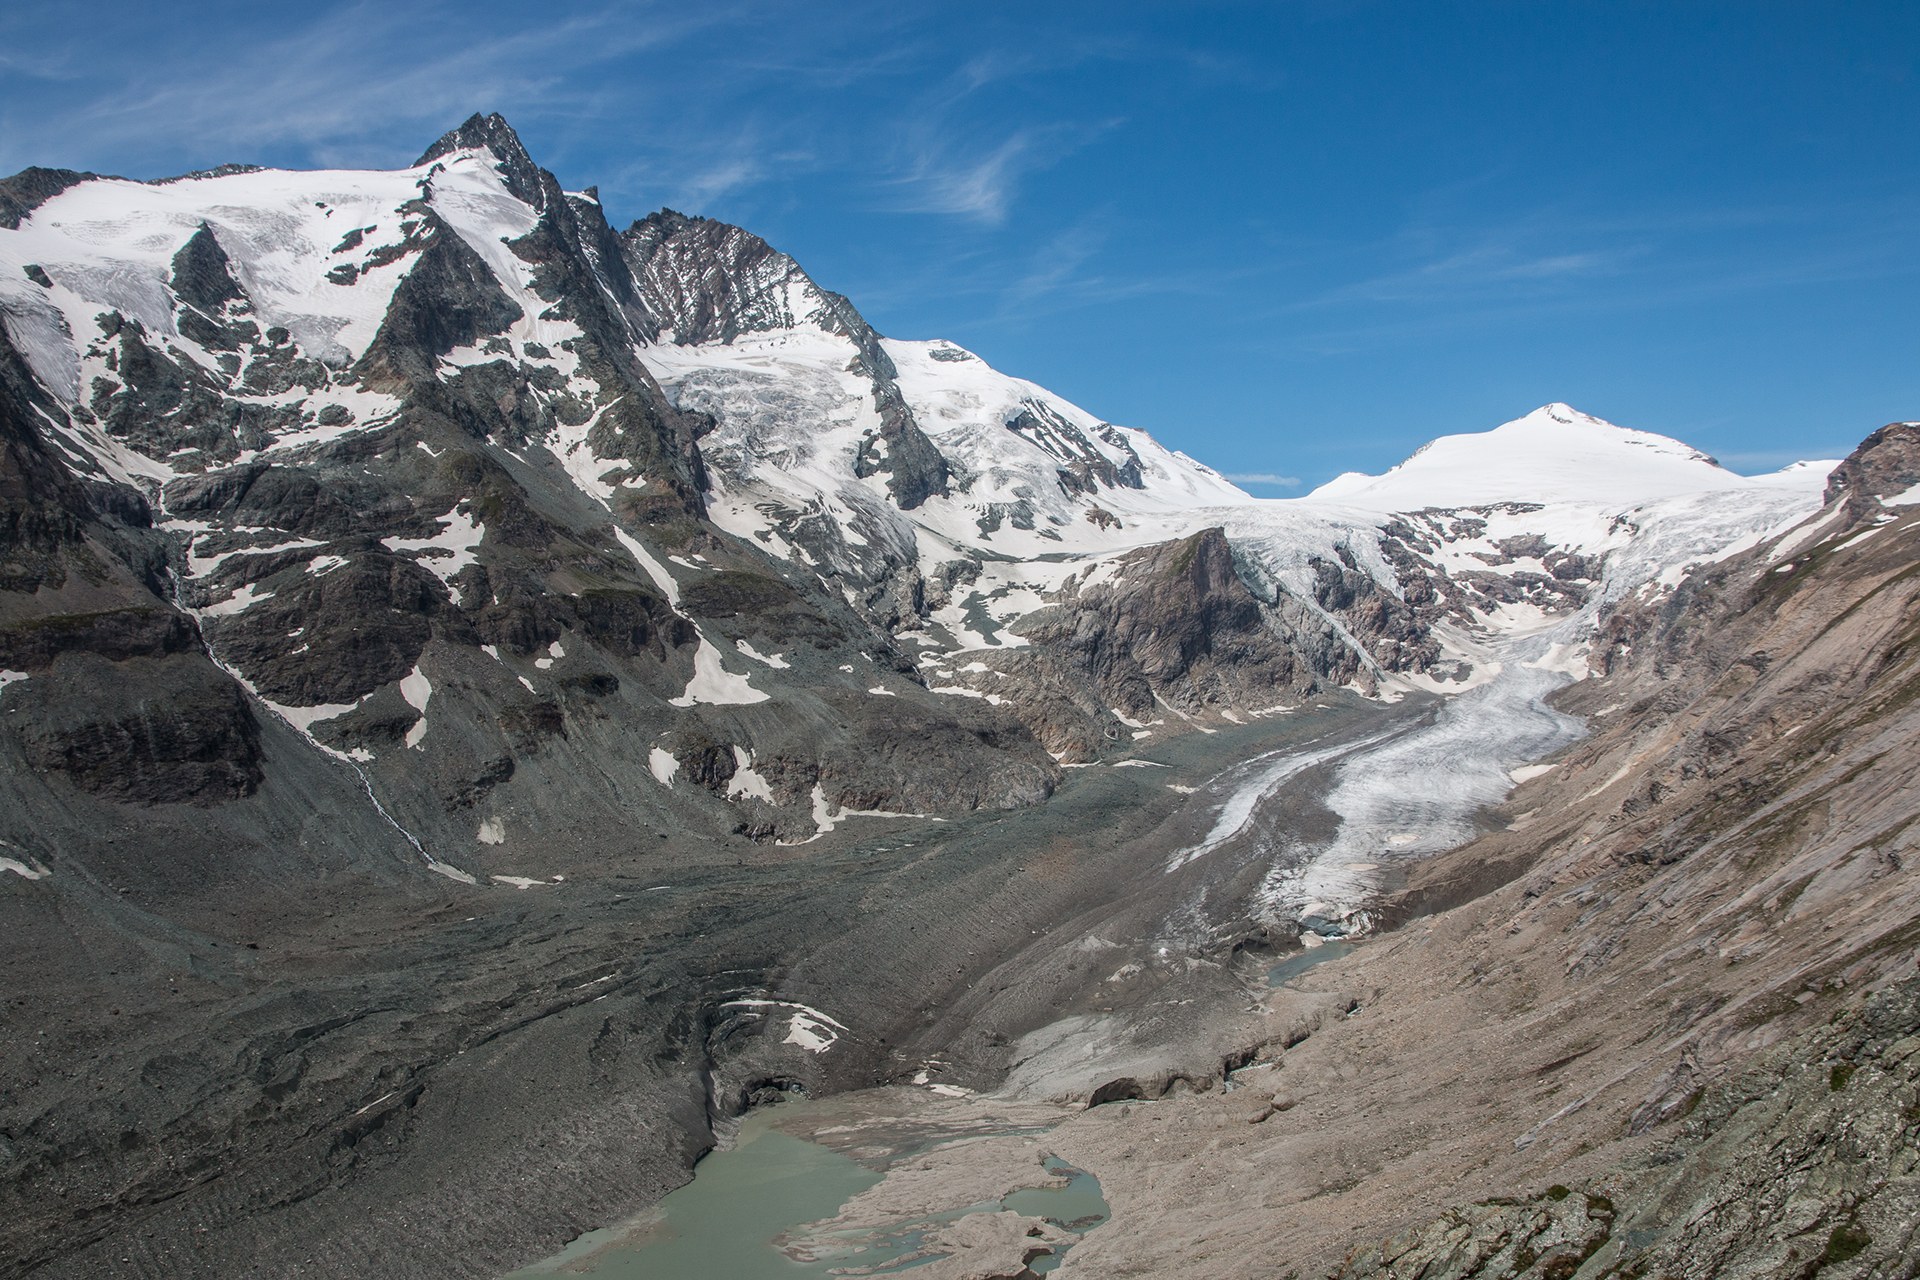 Pasterze Glacier on the Grossglockner, Hohe Tauern